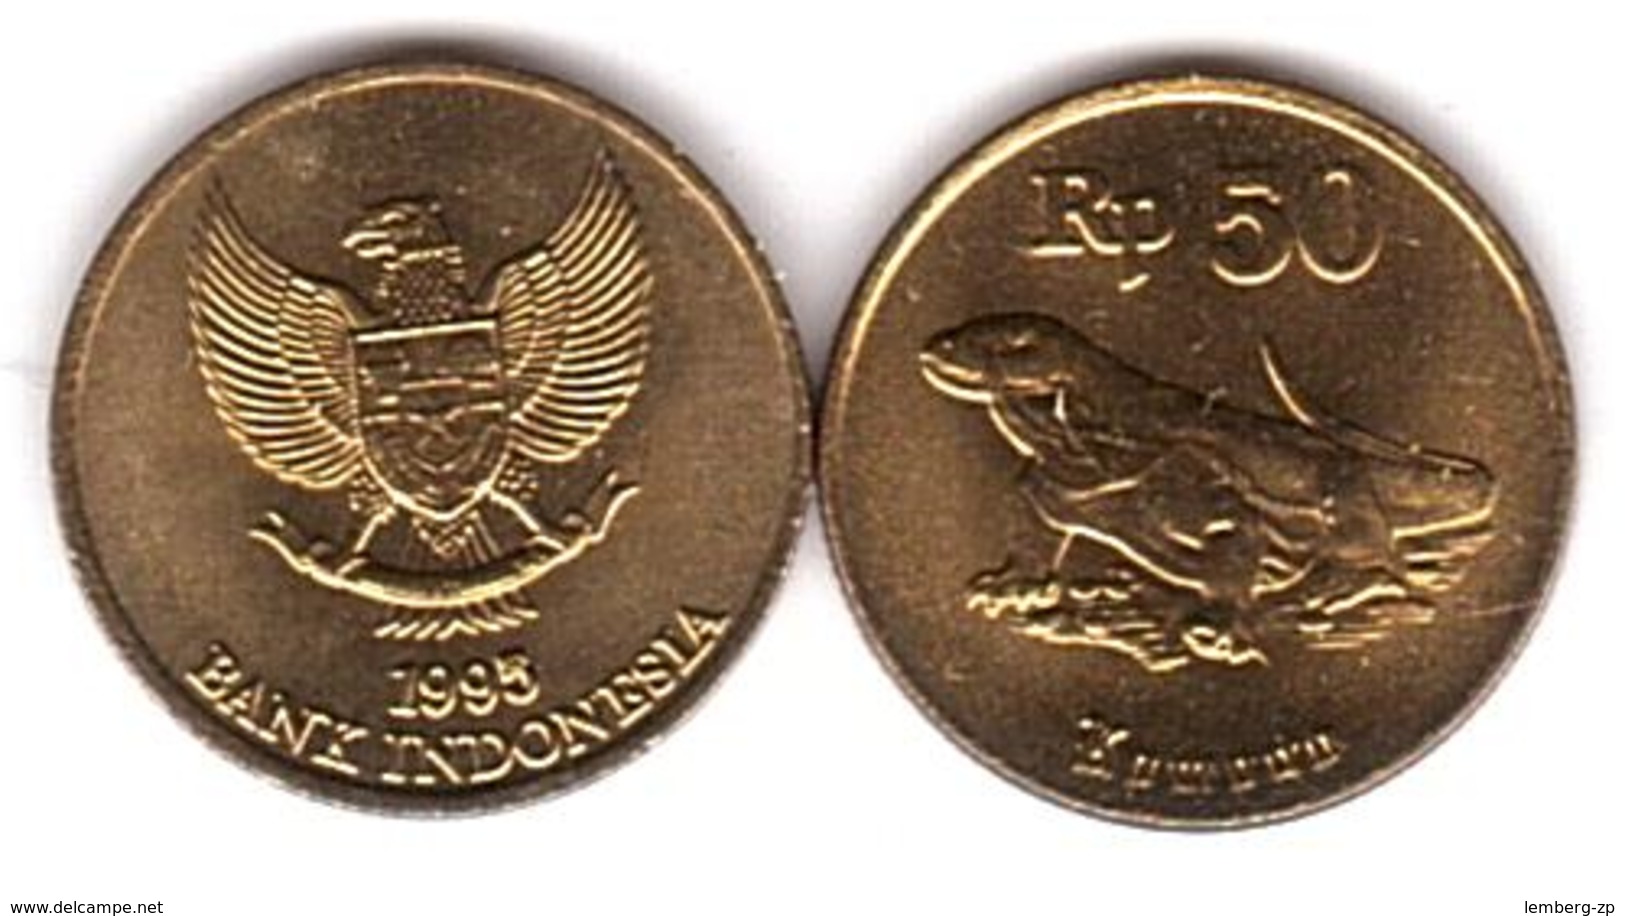 Indonesia - 50 Rupiah 1995 UNC Lemberg-Zp - Indonesië